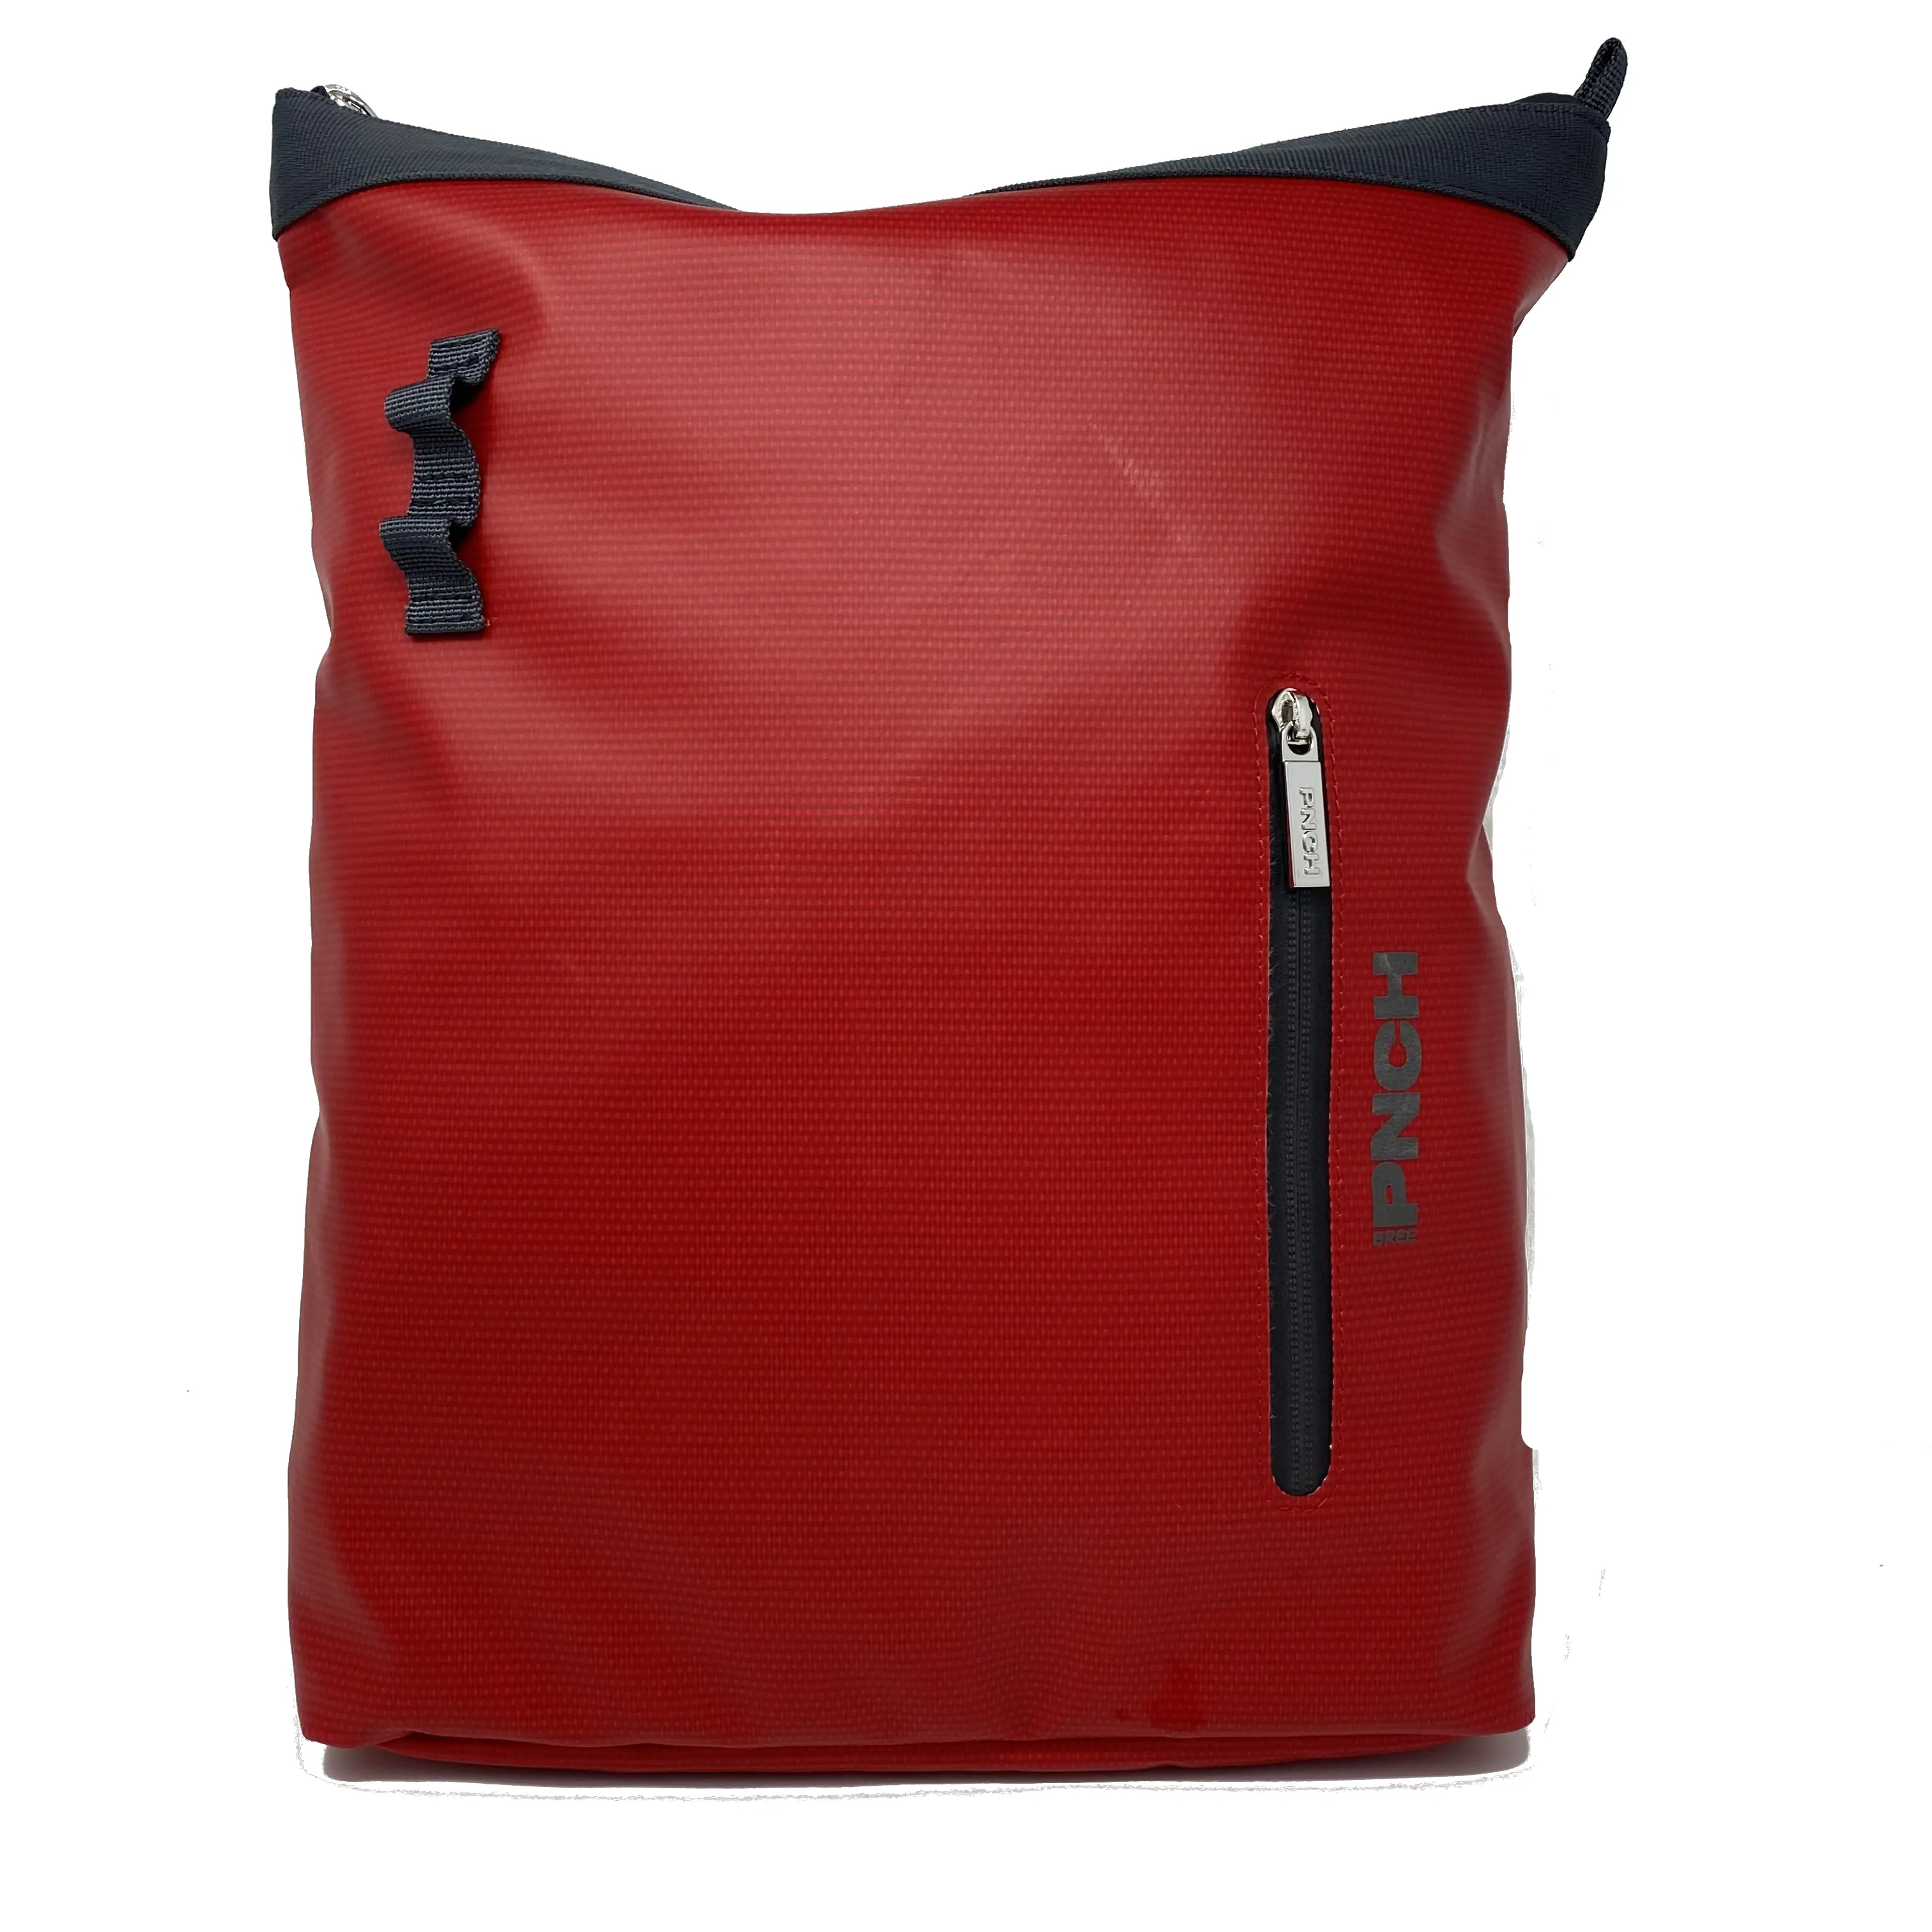 PNCH 797 slim backpack - lava red